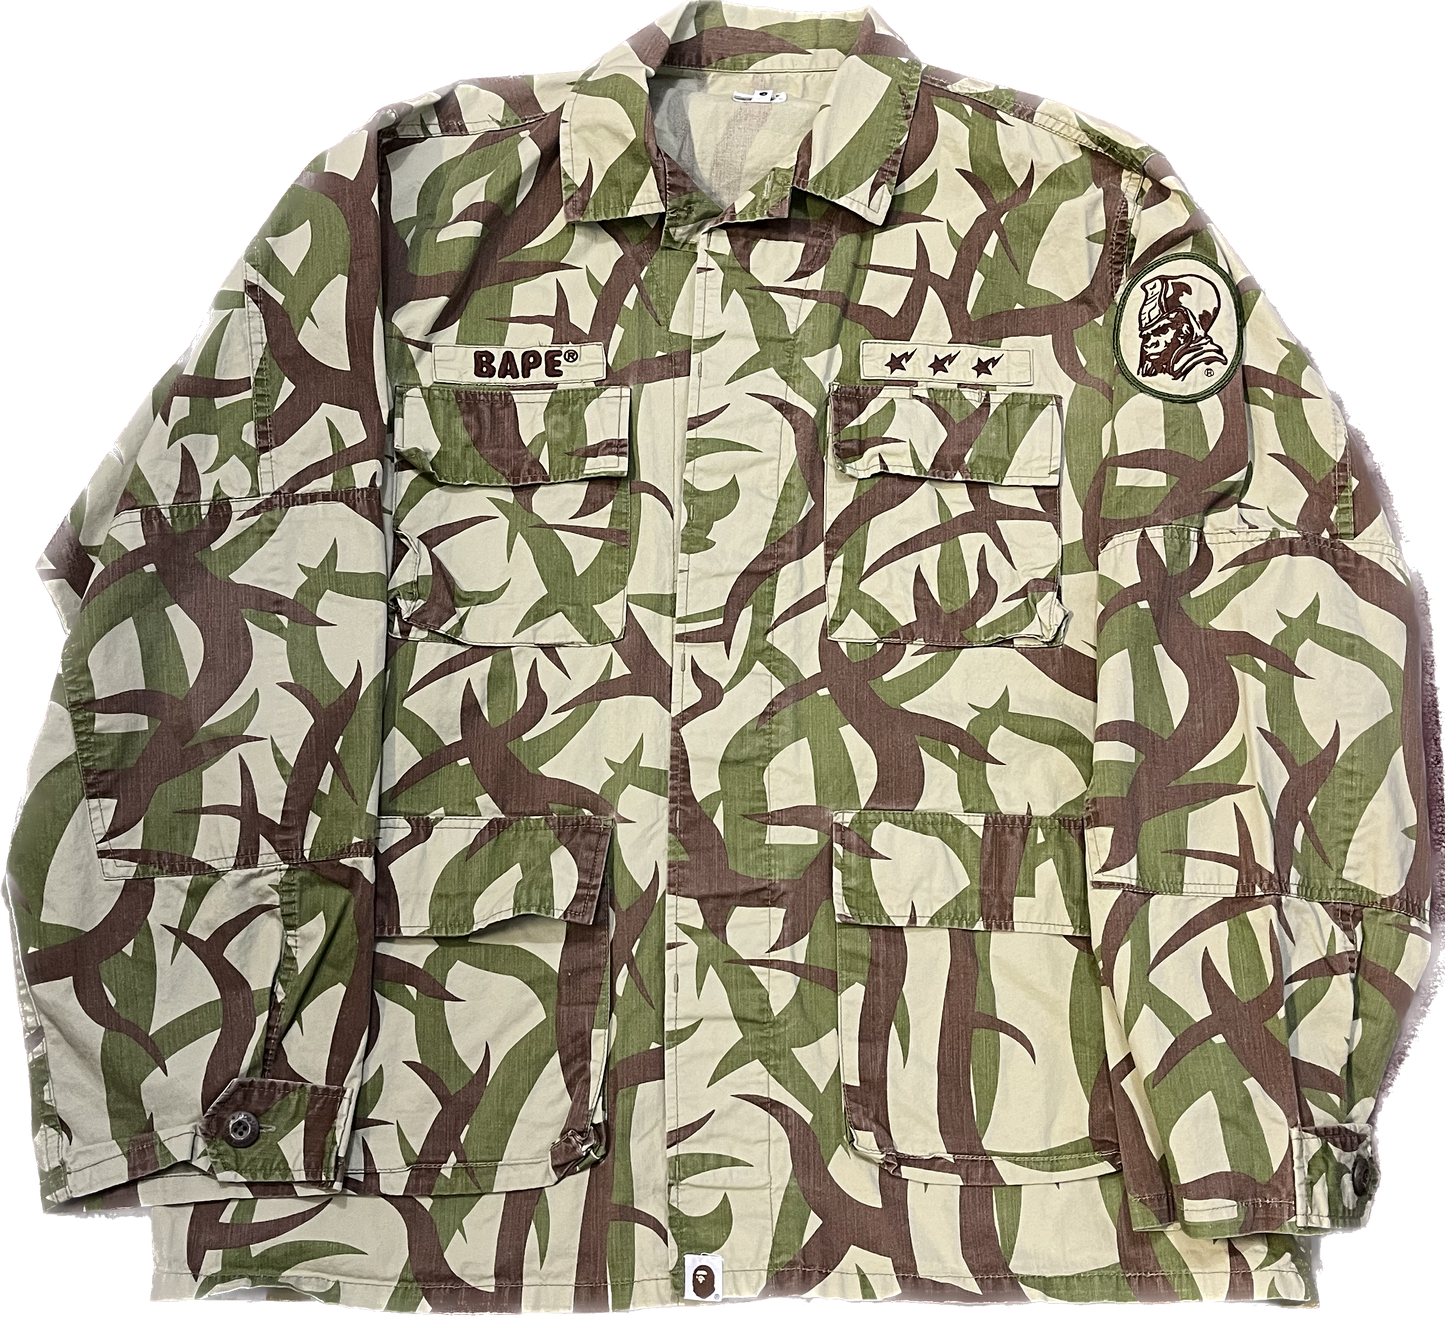 Bape “Jungle Camo” Button Down Jacket